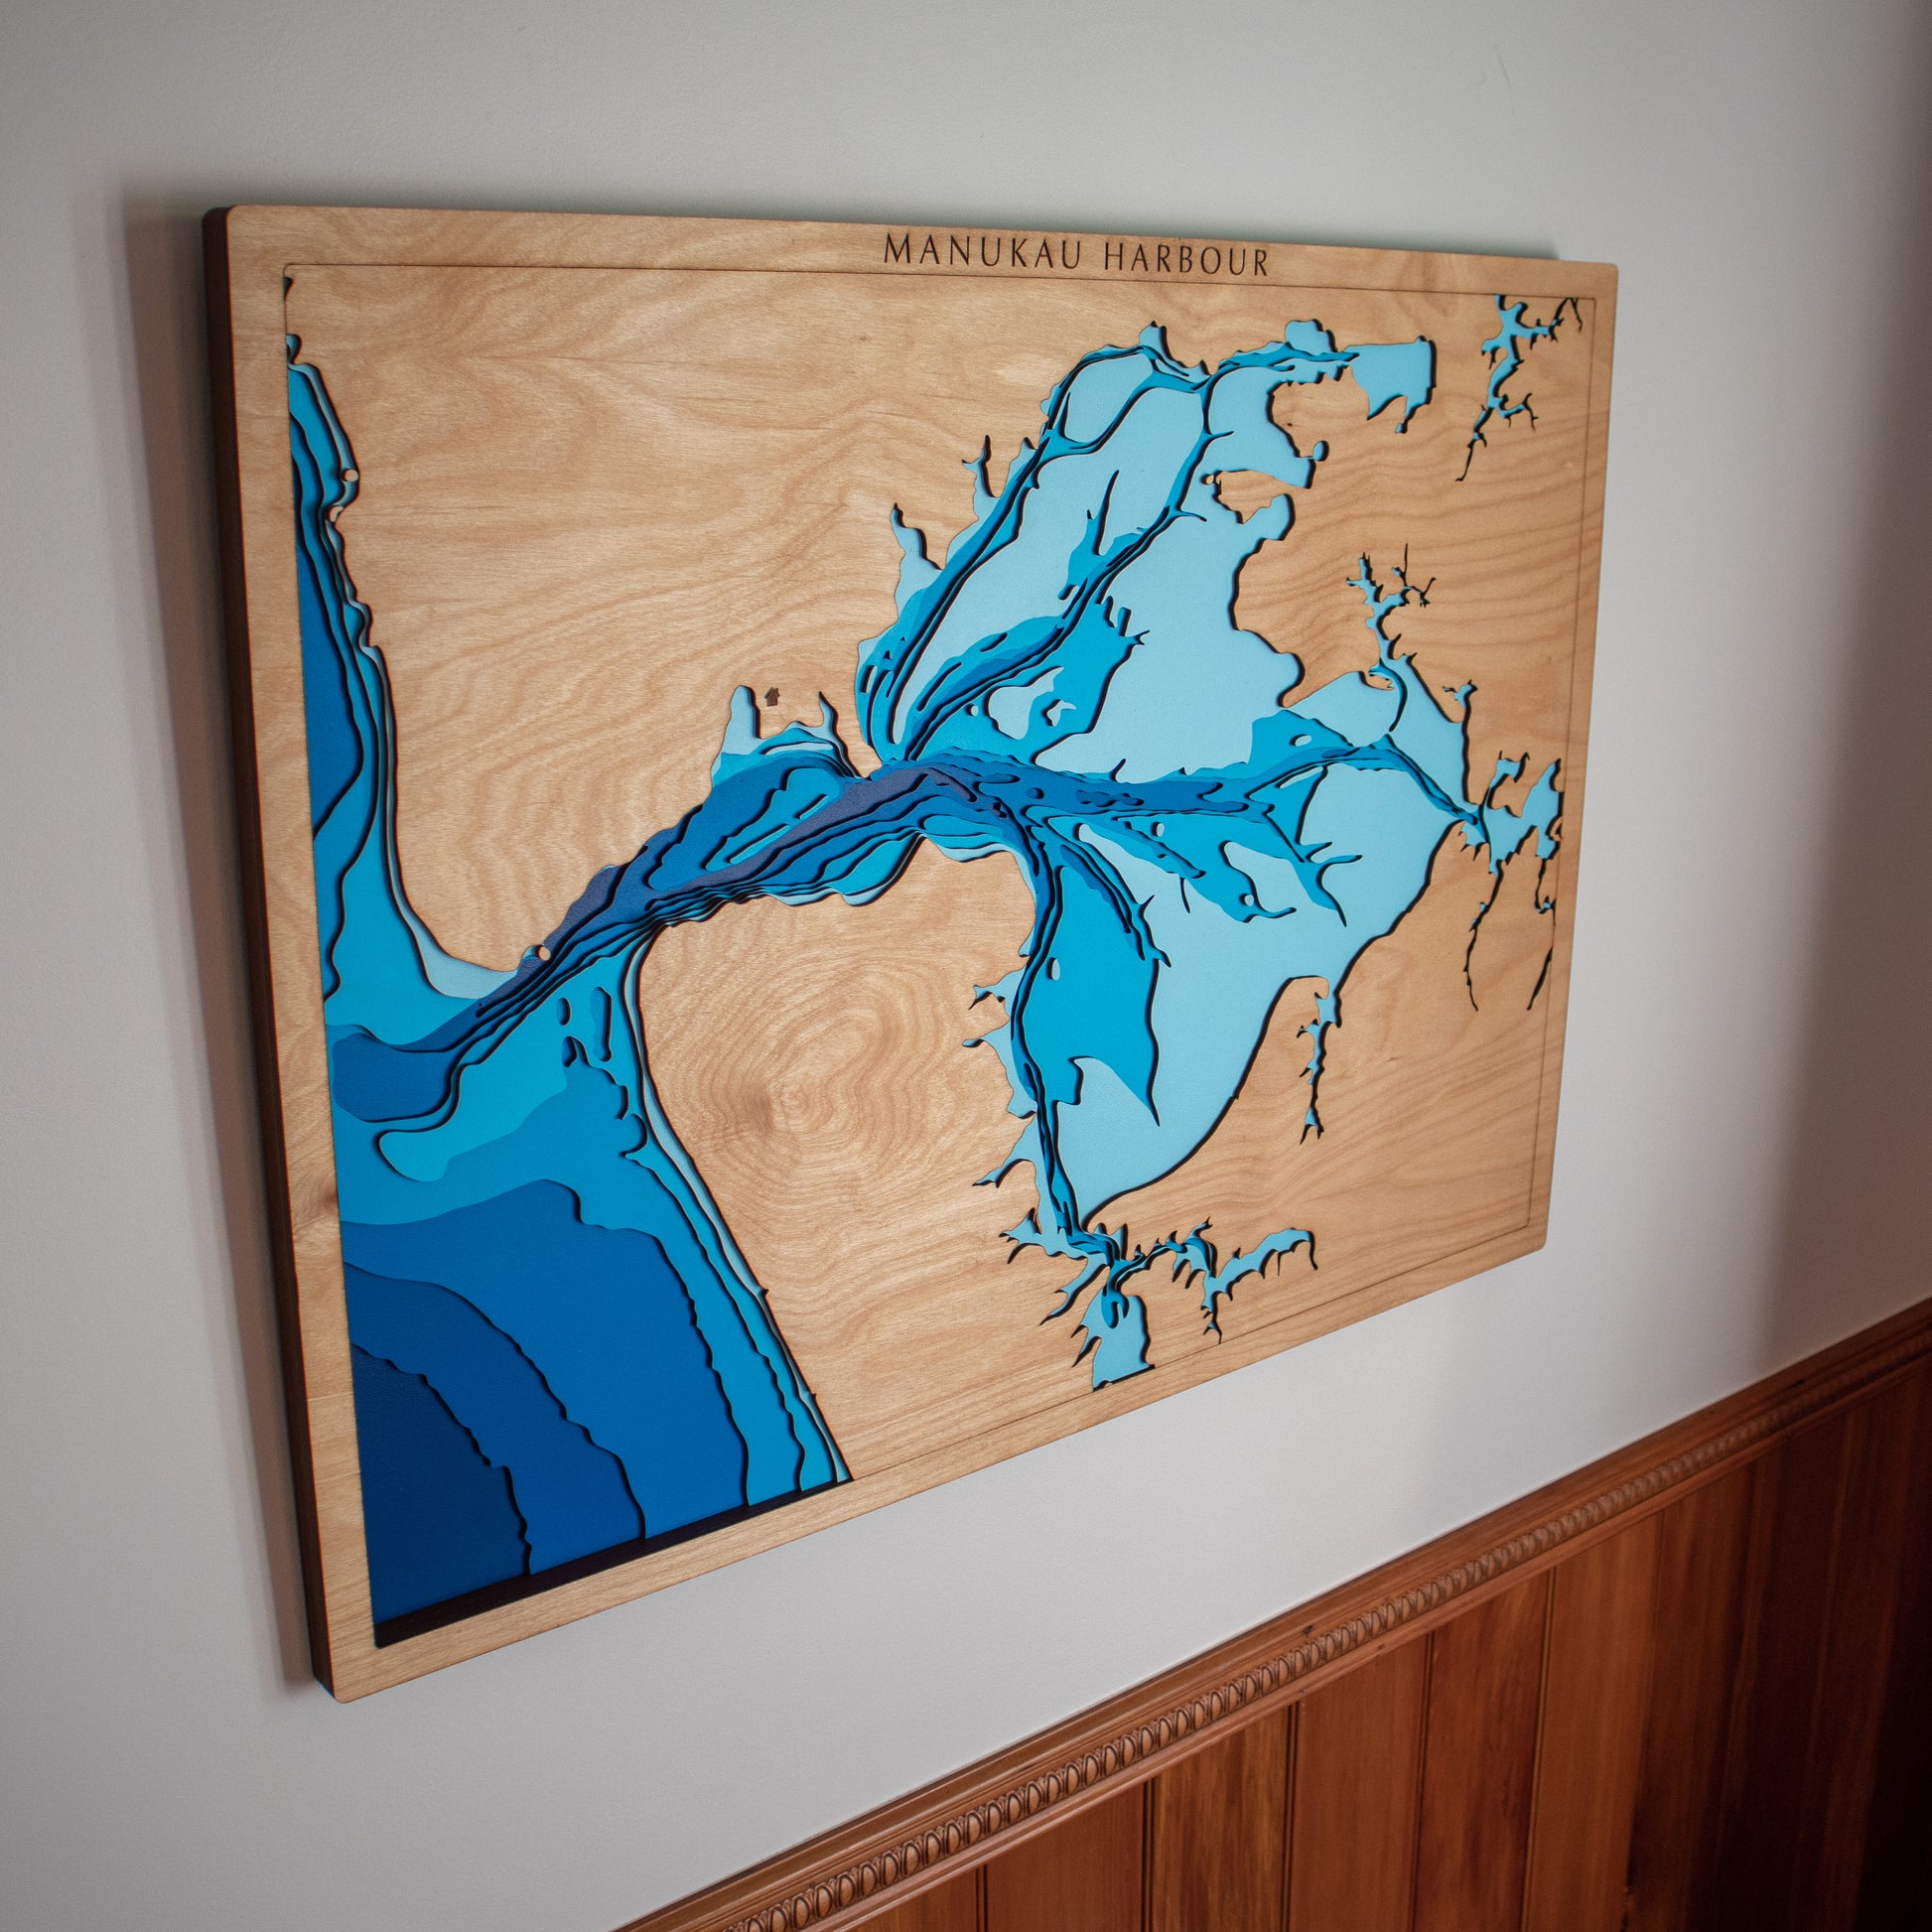 Manukau Harbour - Tide's Out Maps